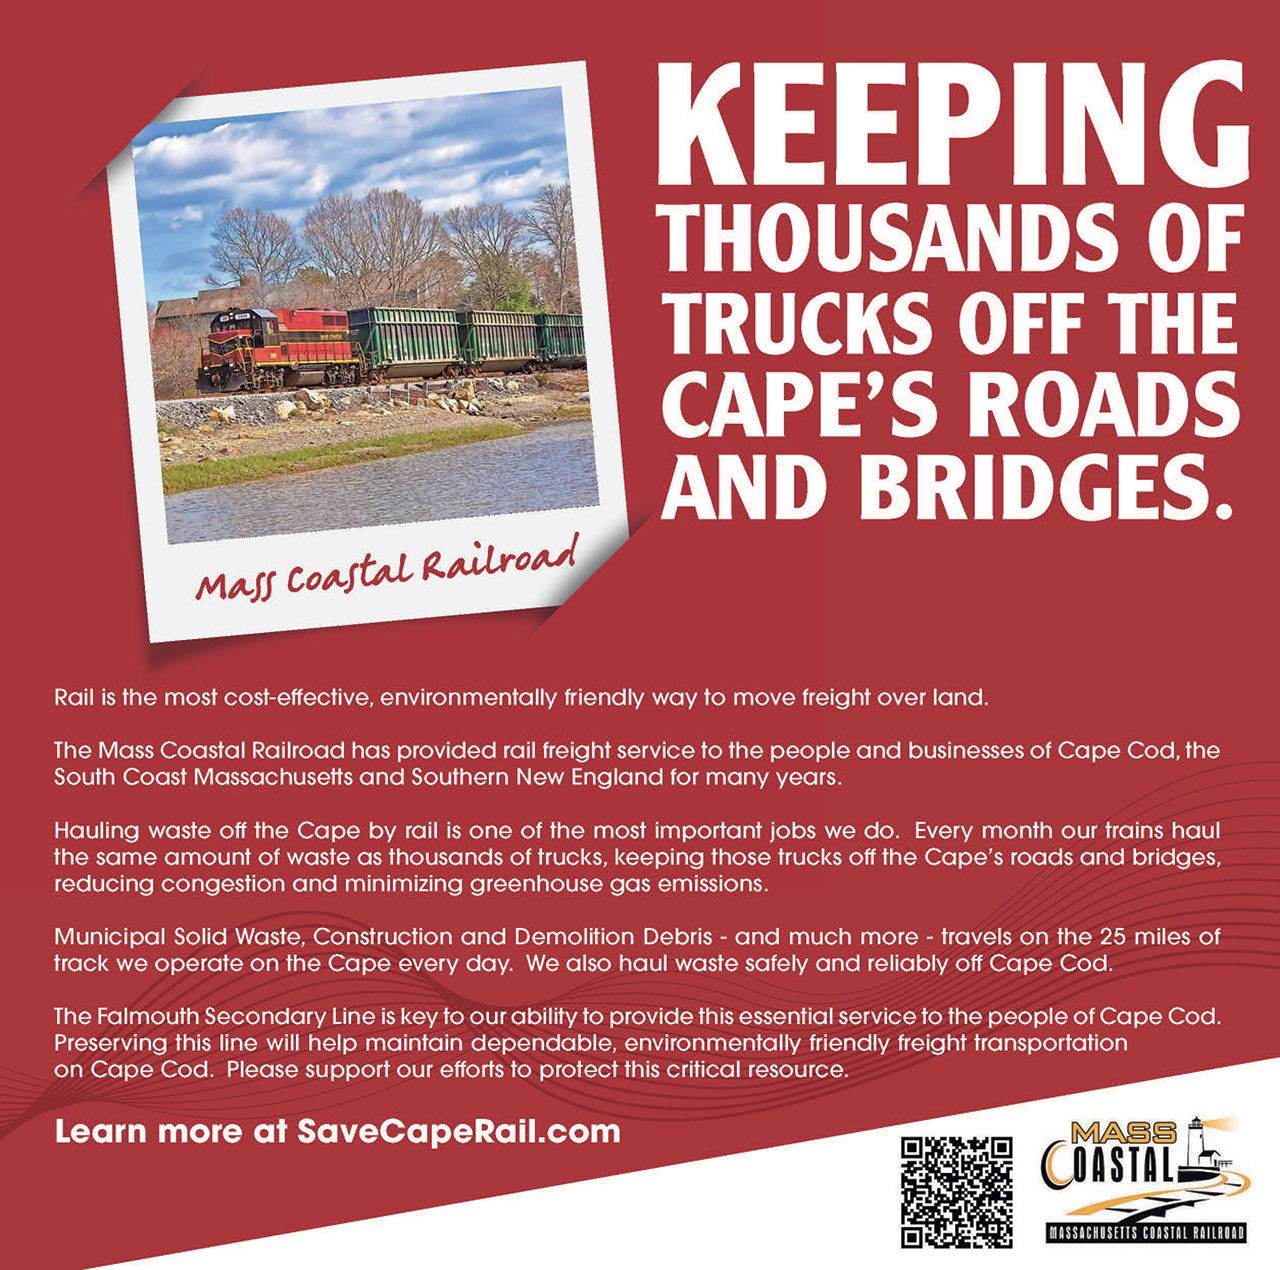 Keep Trucks off Cape Cod Roads & Bridges